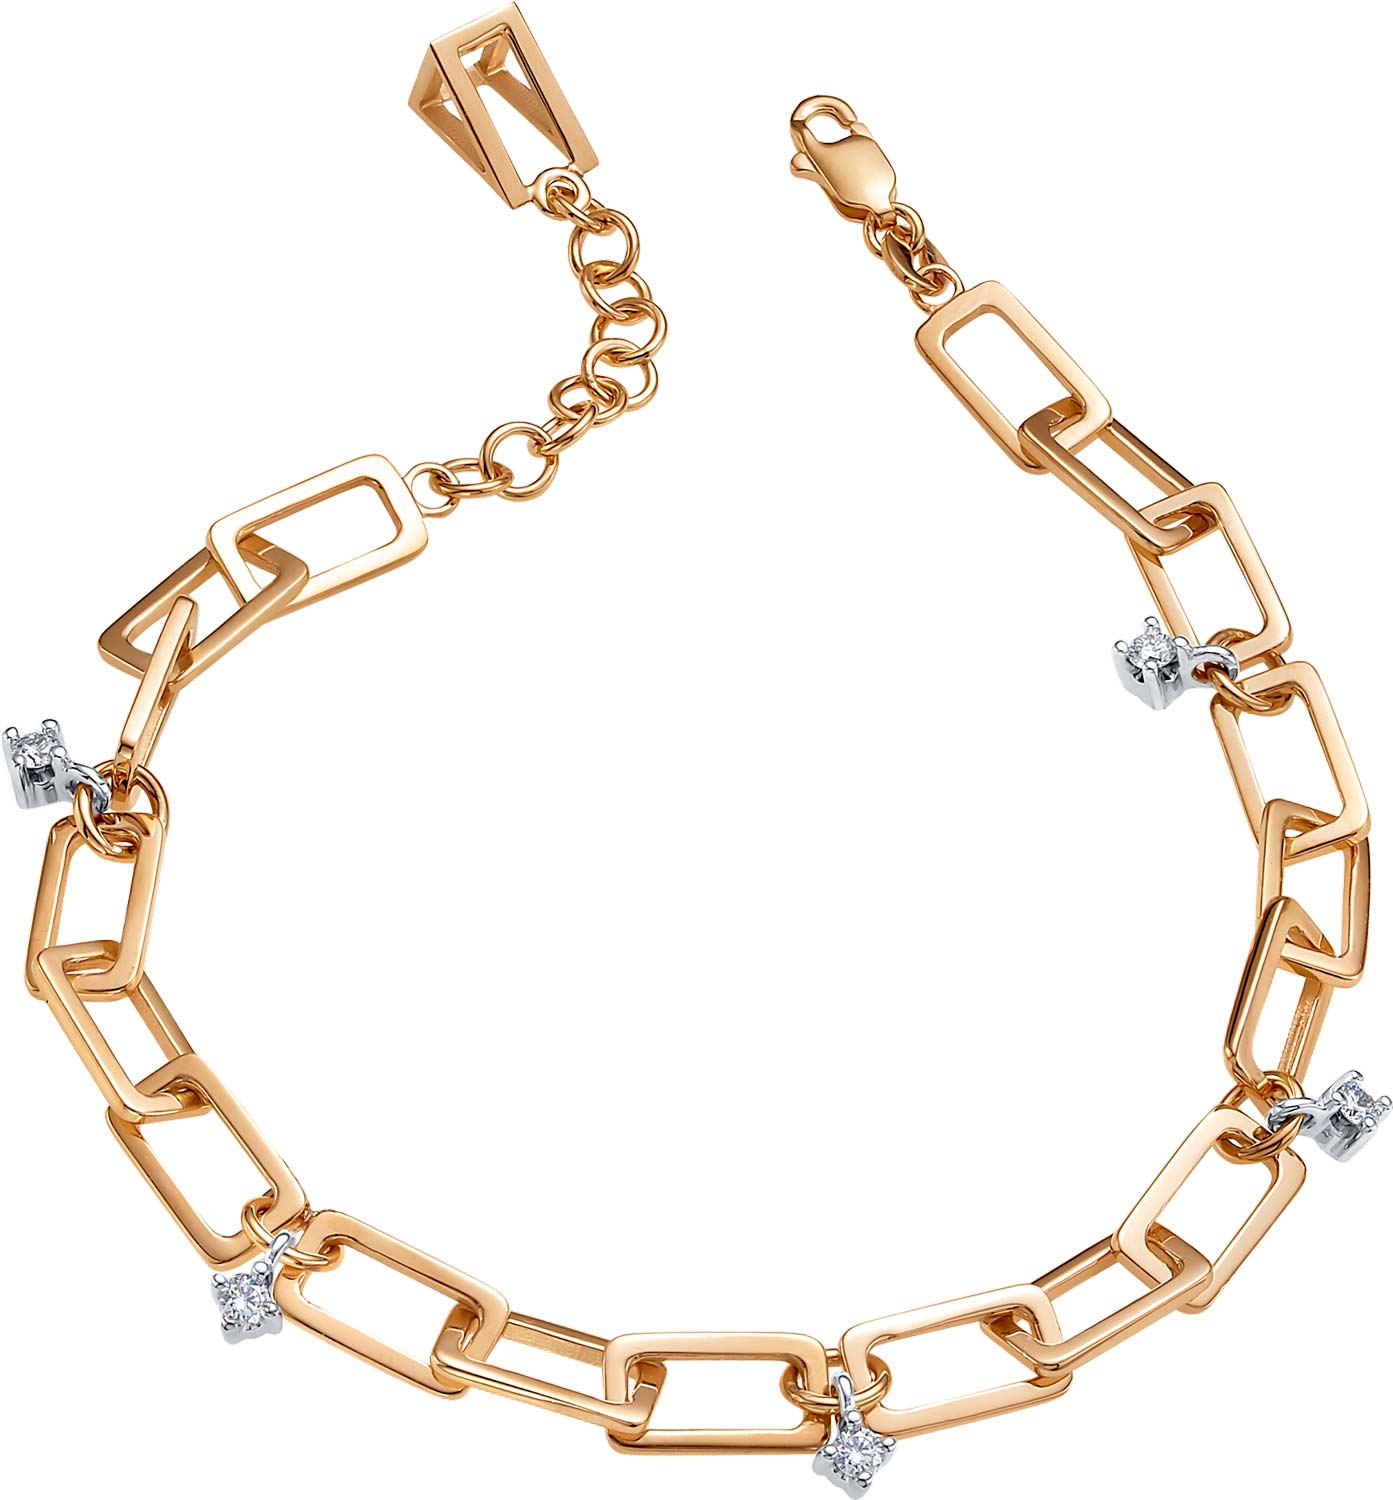      Brilliant Style Jewelry 4016-410  